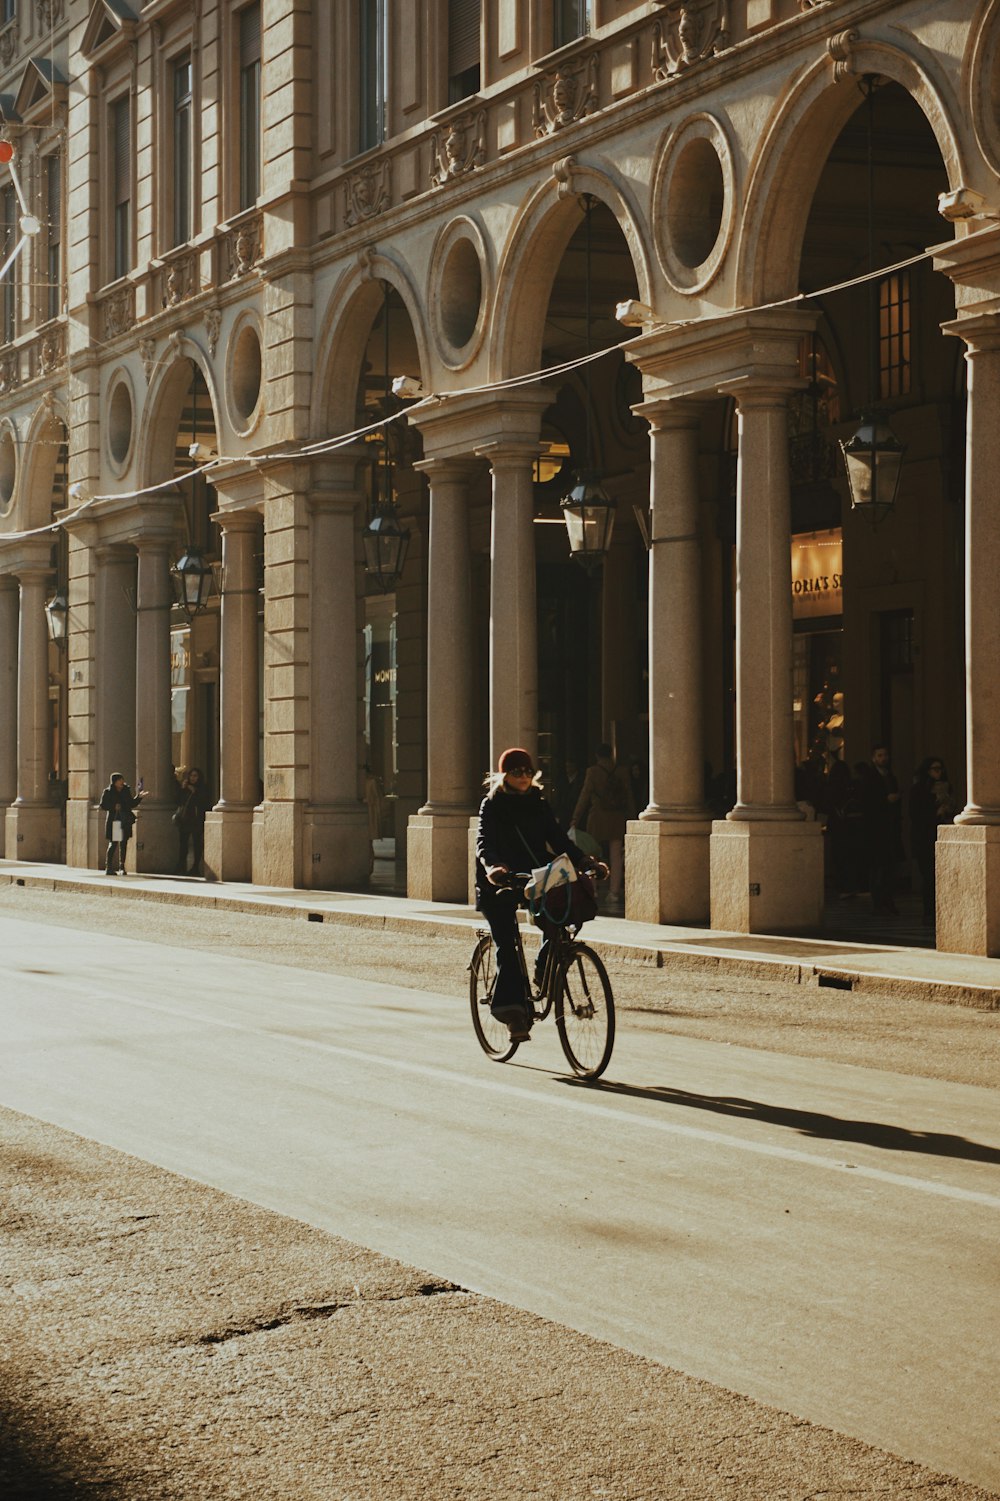 Un hombre andando en bicicleta por una calle junto a edificios altos